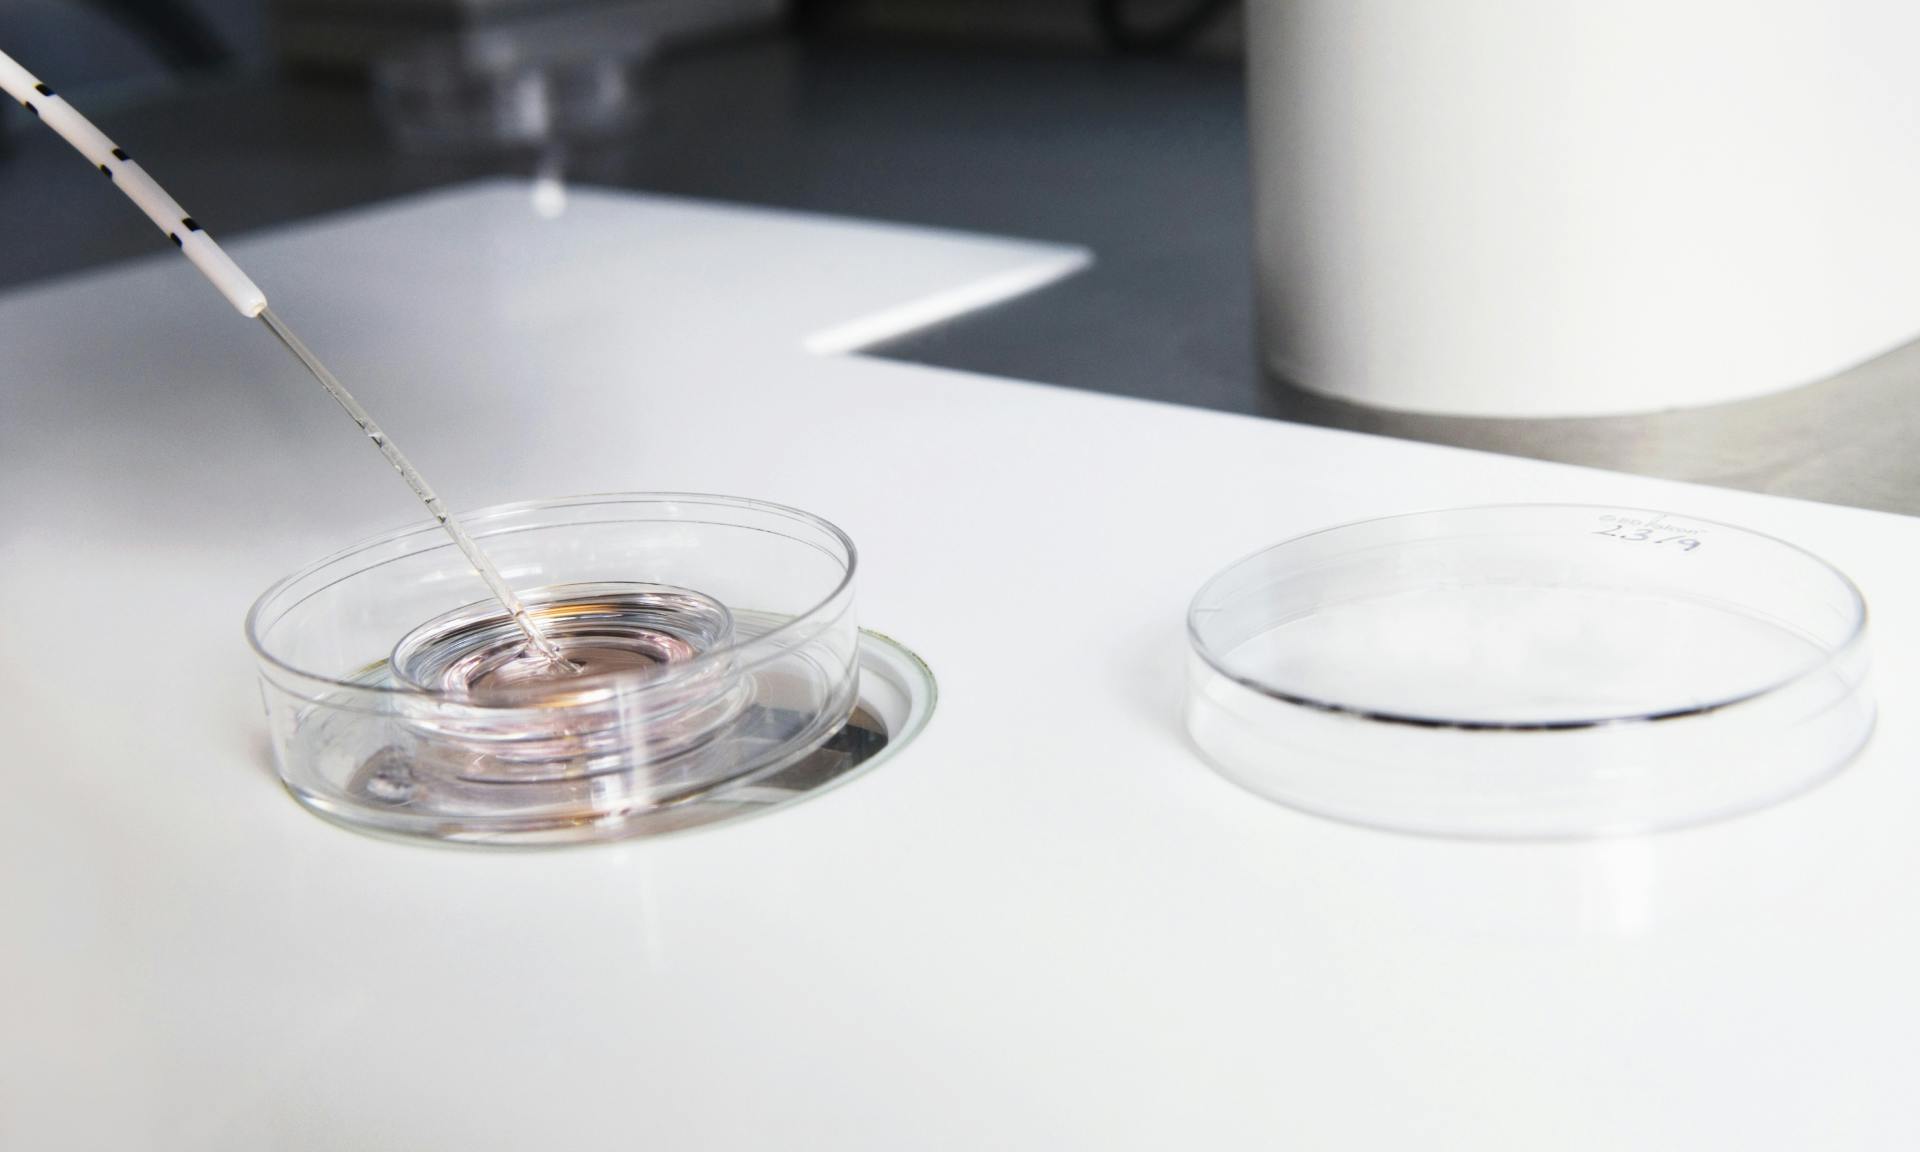 Embryos being fertilized in a lab